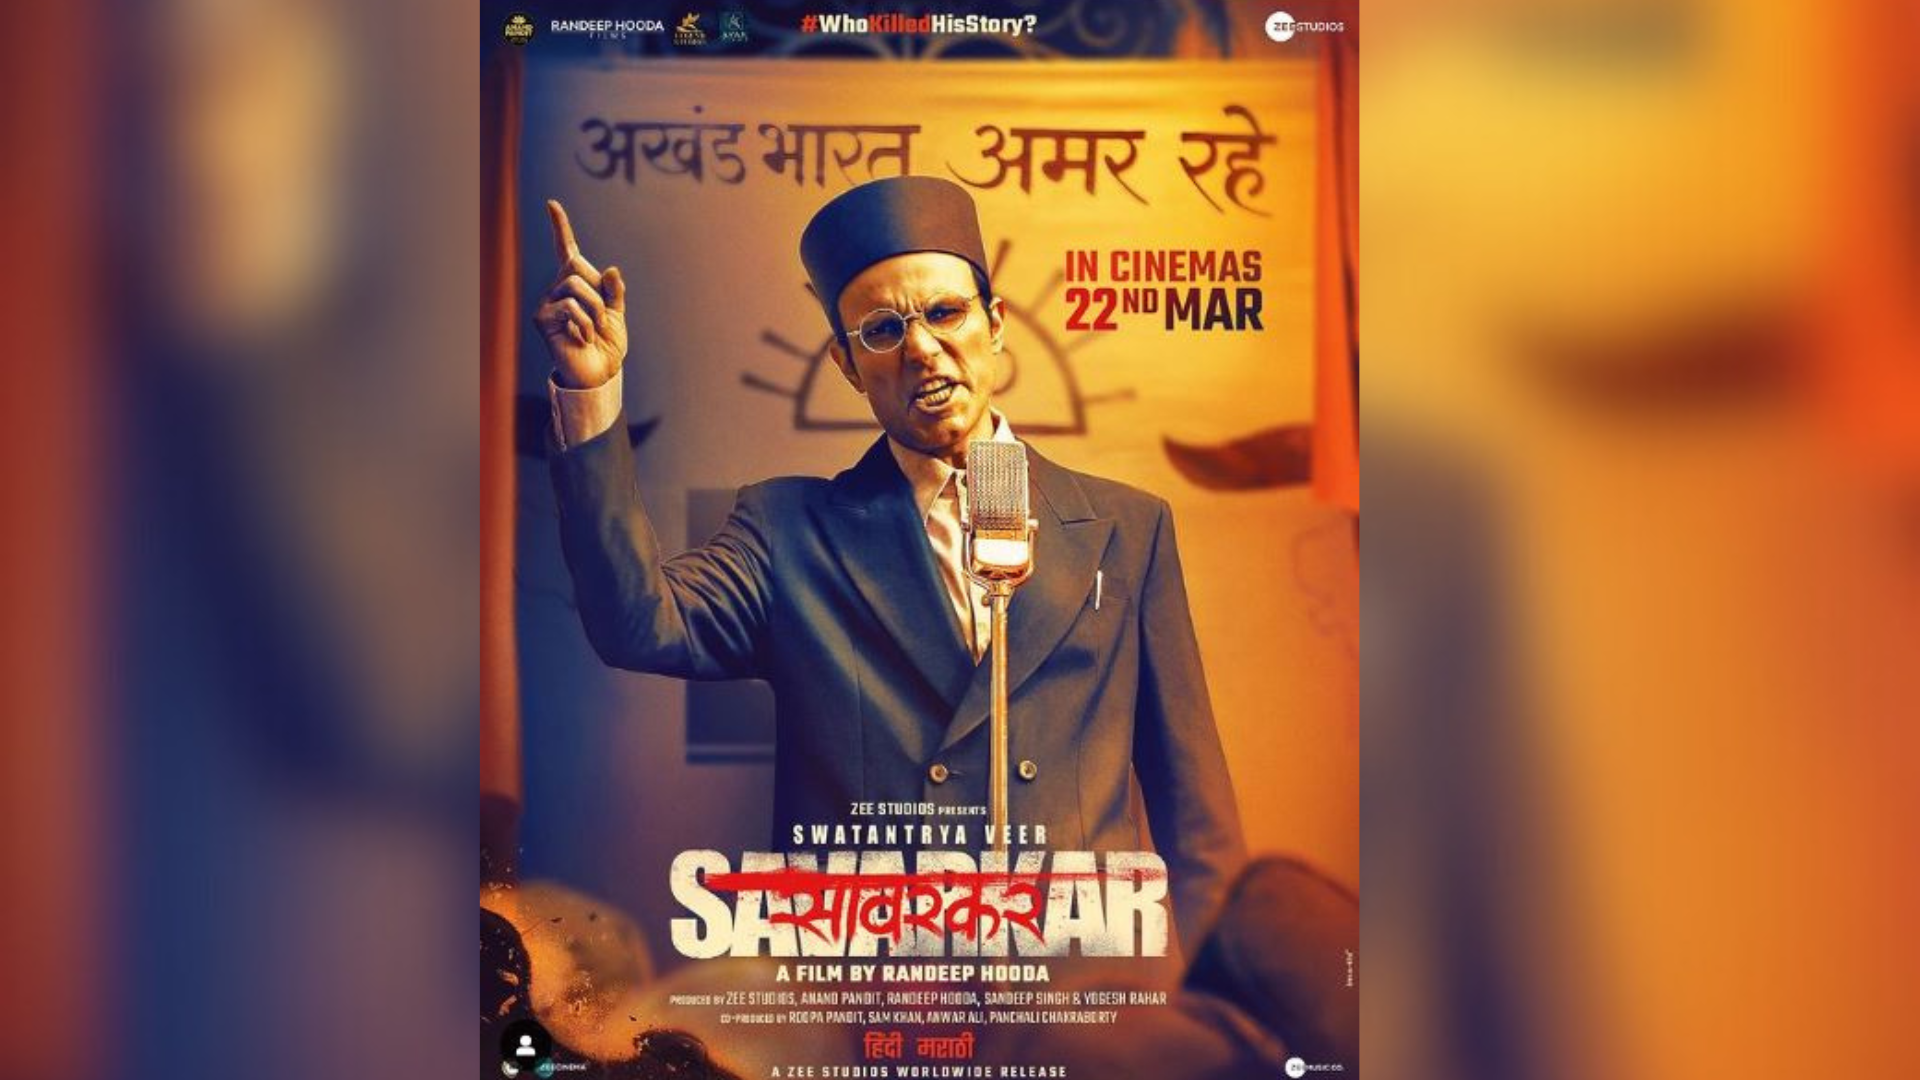 Randeep Hooda’s ‘Swatantrya Veer Savarkar’ Accumulates Rs 11.35 Crore On Its 7th Day At The Box Office